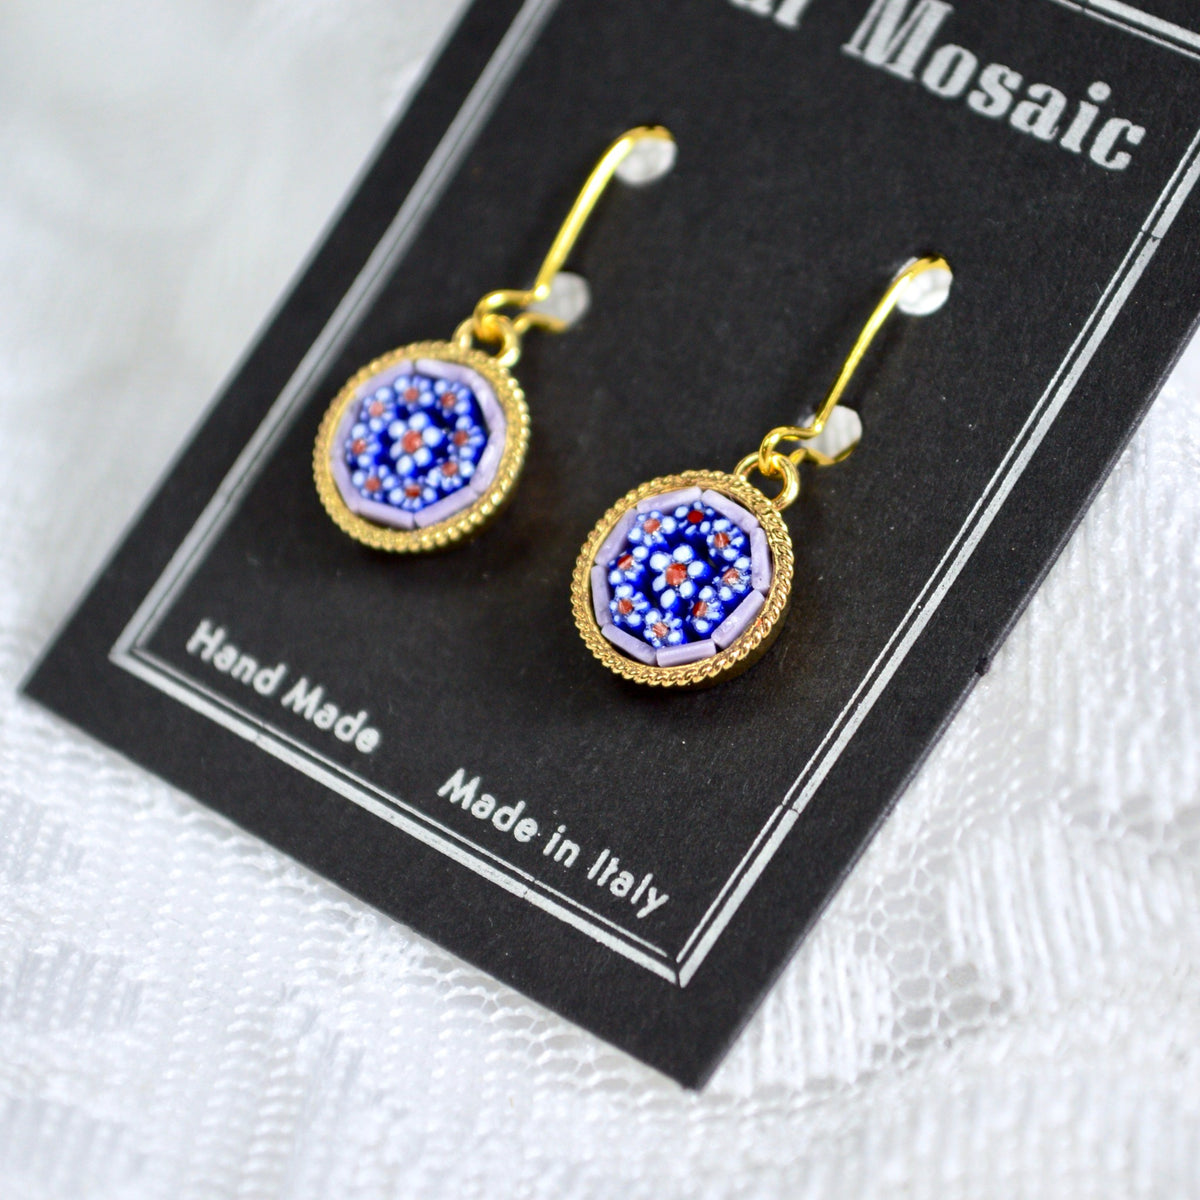 Florentine Micro Mosaic Earrings, Small Circle, Made in Italy - My Italian Decor